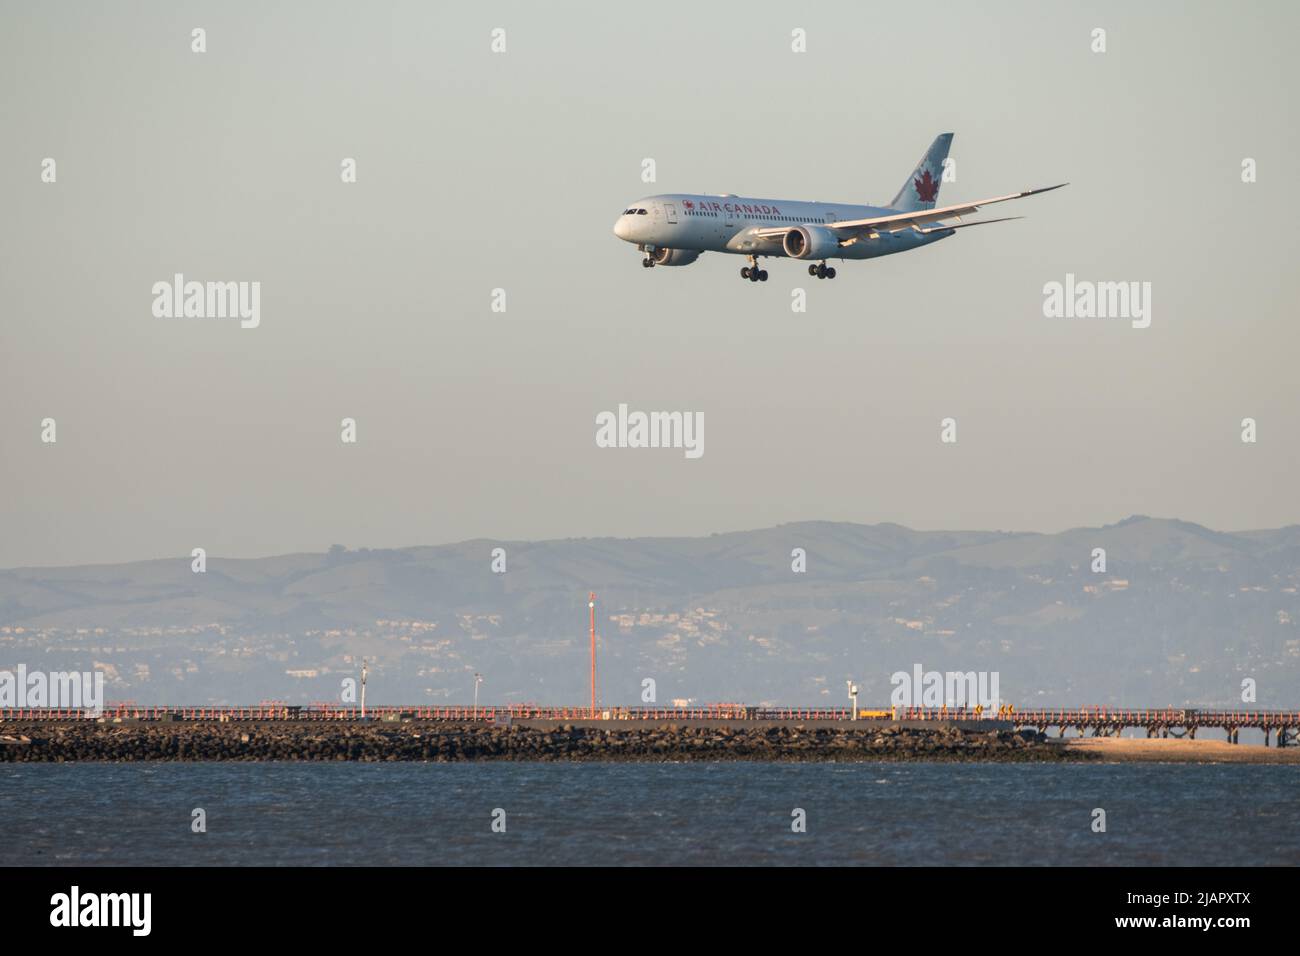 A landing Air Canada flight, the plane descends towards the runway at San Francisco International airport, California, USA. Stock Photo